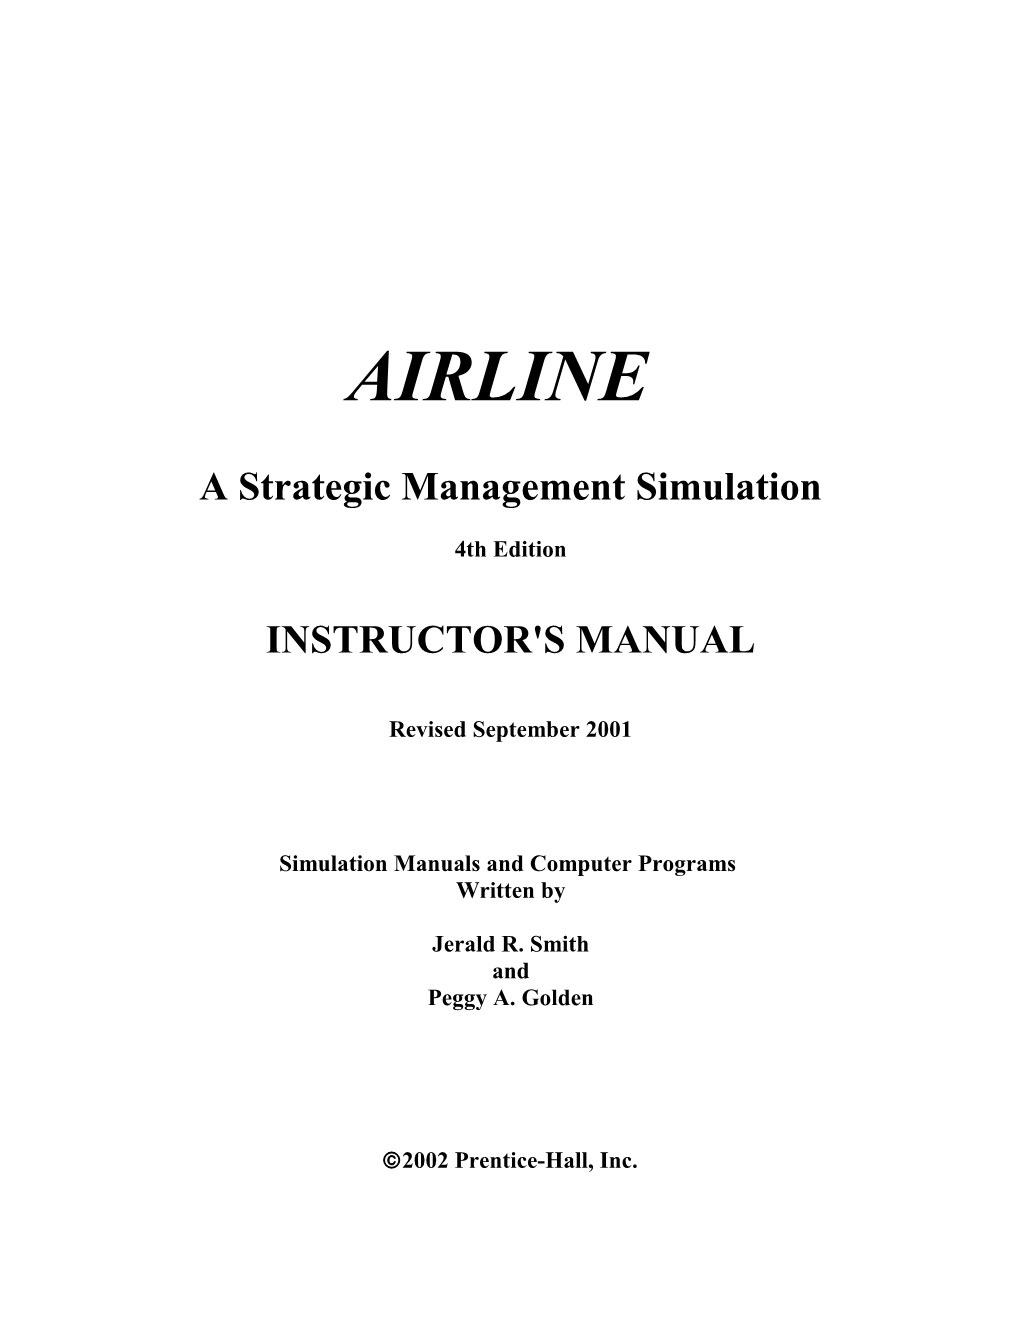 Simulation Manuals and Computer Programs